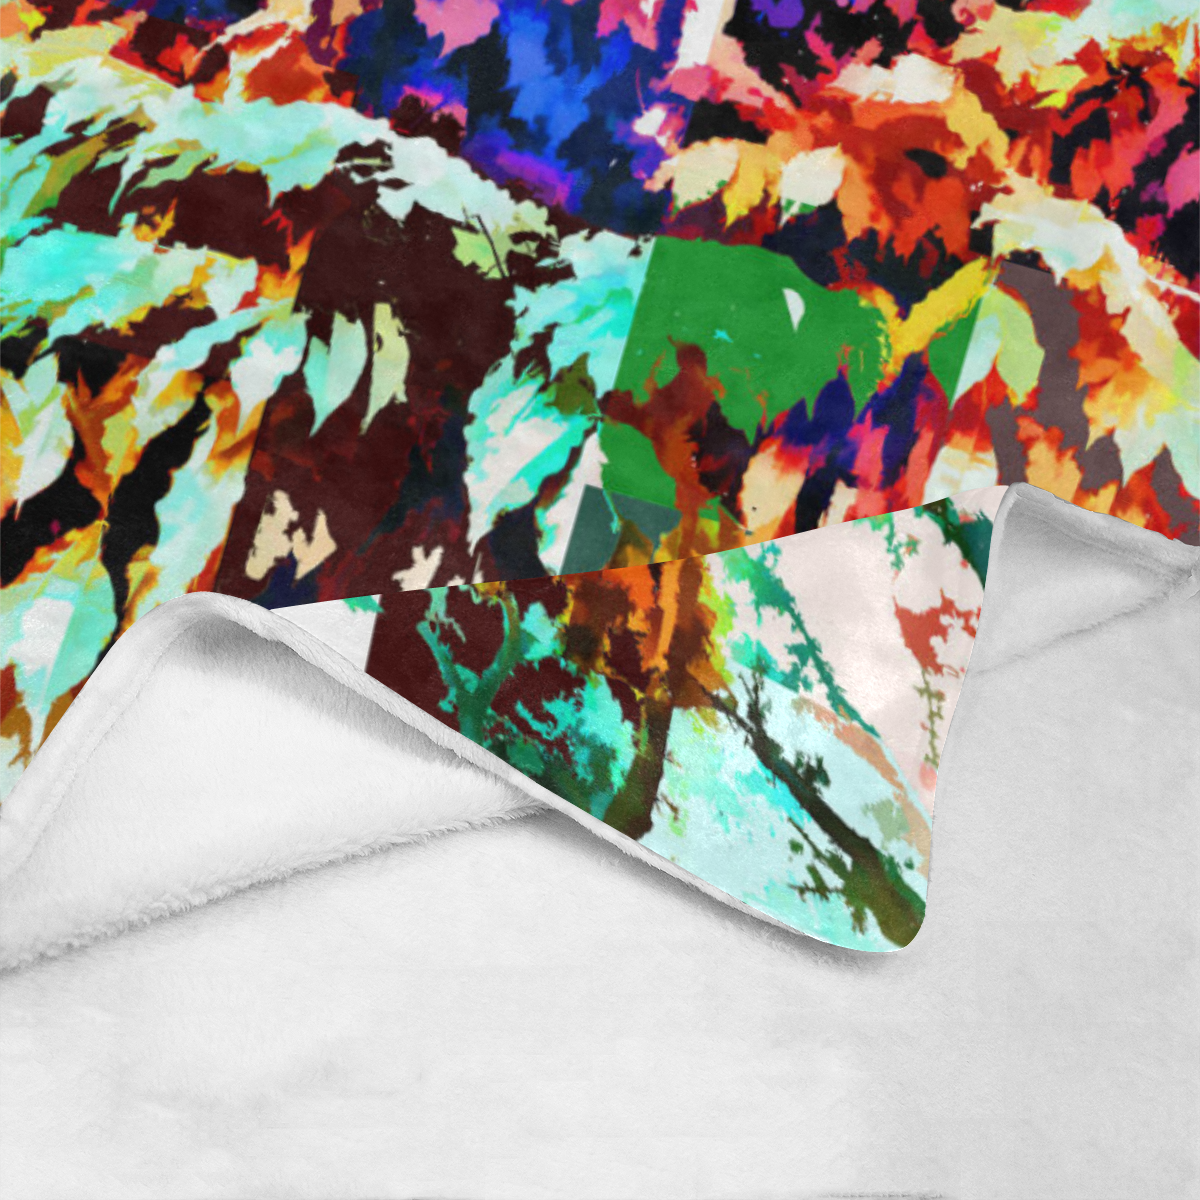 Foliage Patchwork #7 - Jera Nour Ultra-Soft Micro Fleece Blanket 60"x80"